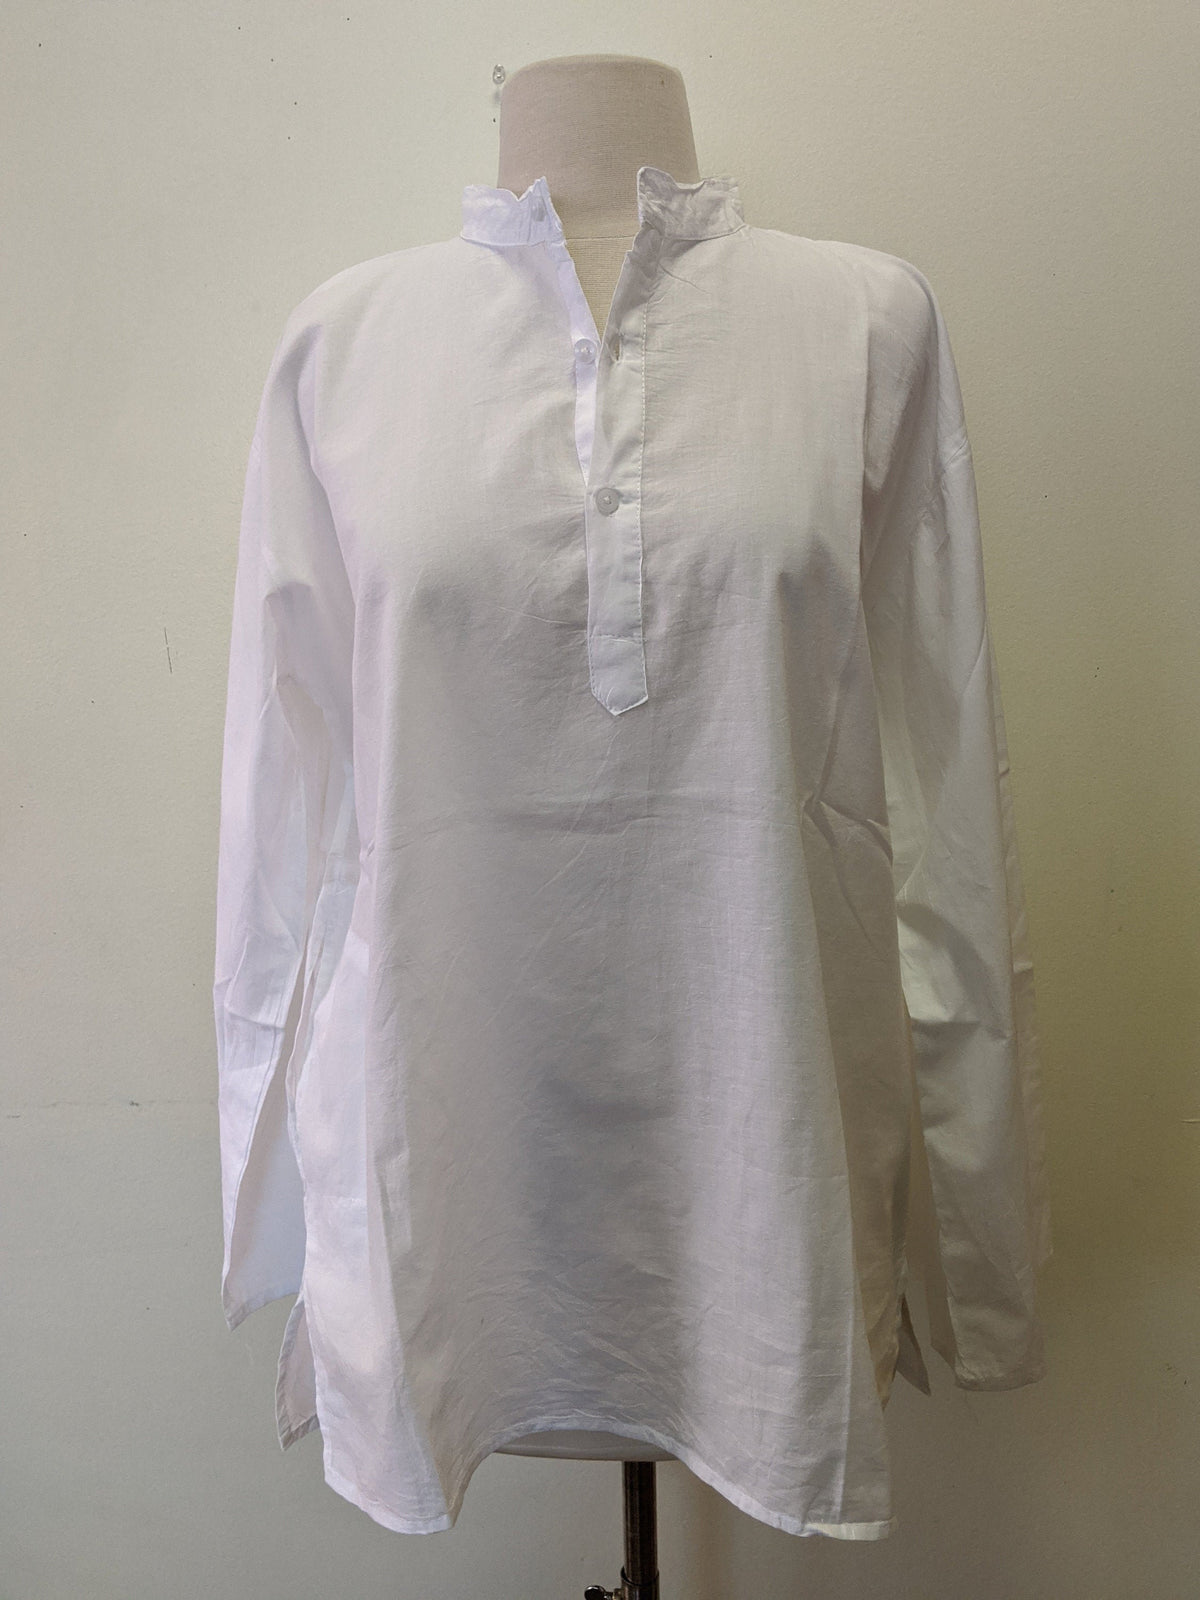 White Cotton Classic Shirt, Tunic, Kurta, Blouse, Band collar for woman or man - Live in Kurta's